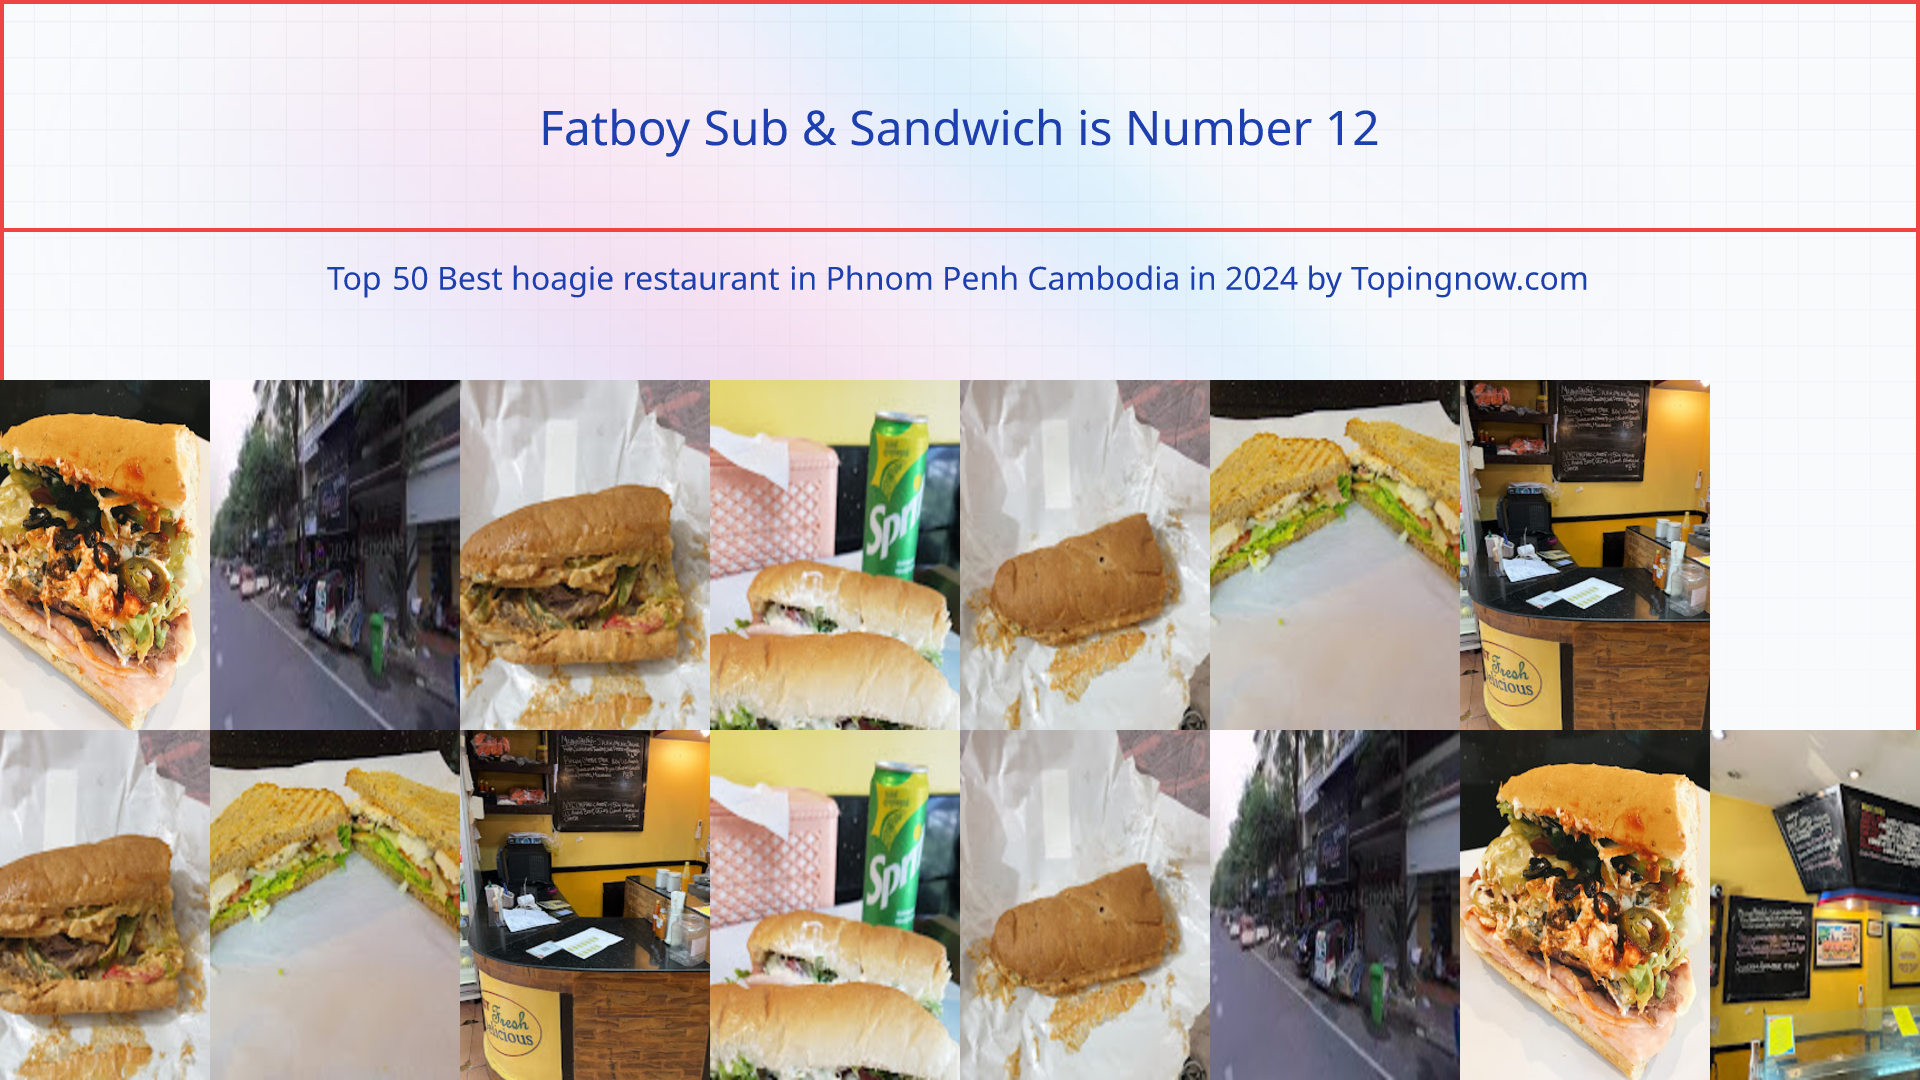 Fatboy Sub & Sandwich: Top 50 Best hoagie restaurant in Phnom Penh Cambodia in 2024